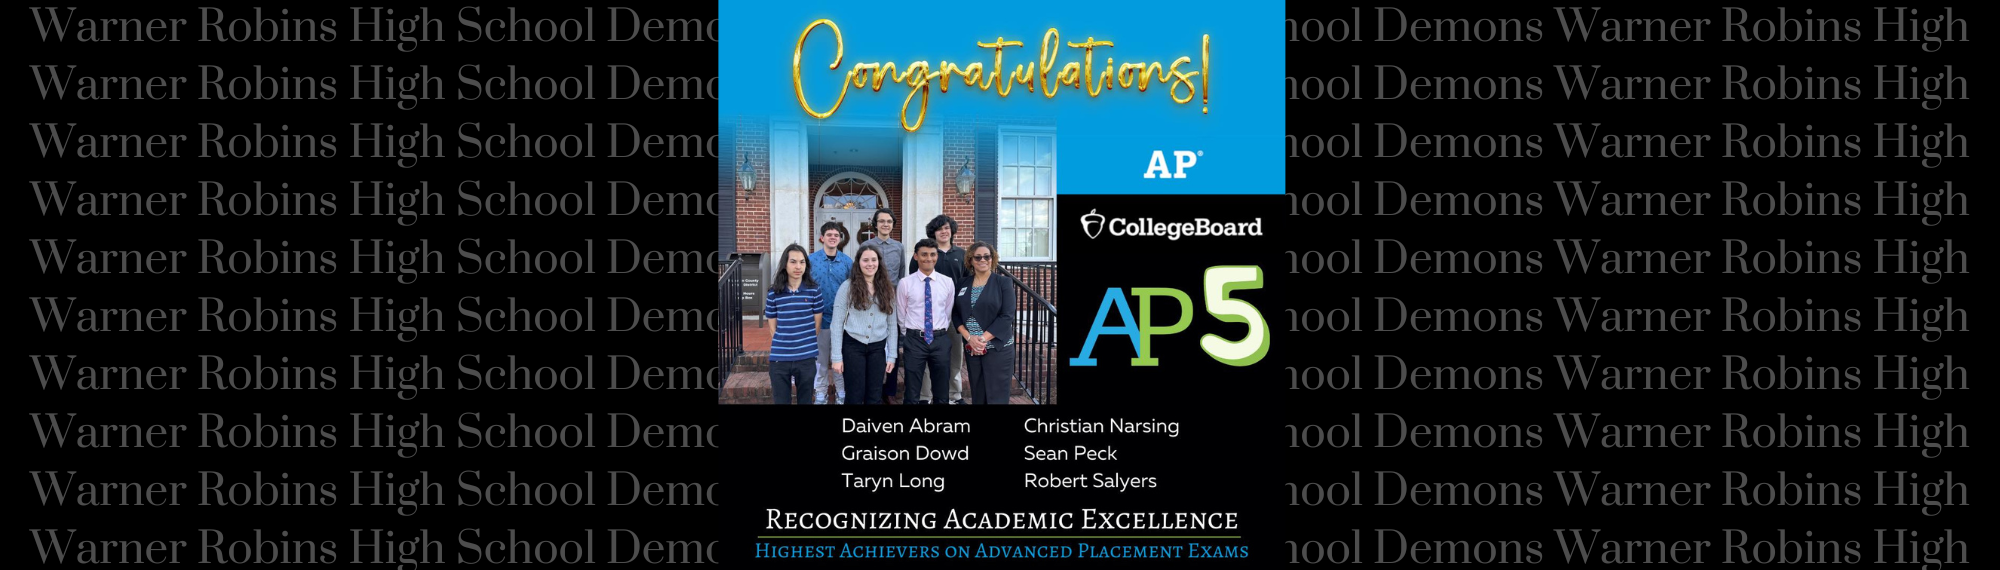 AP 5 Students